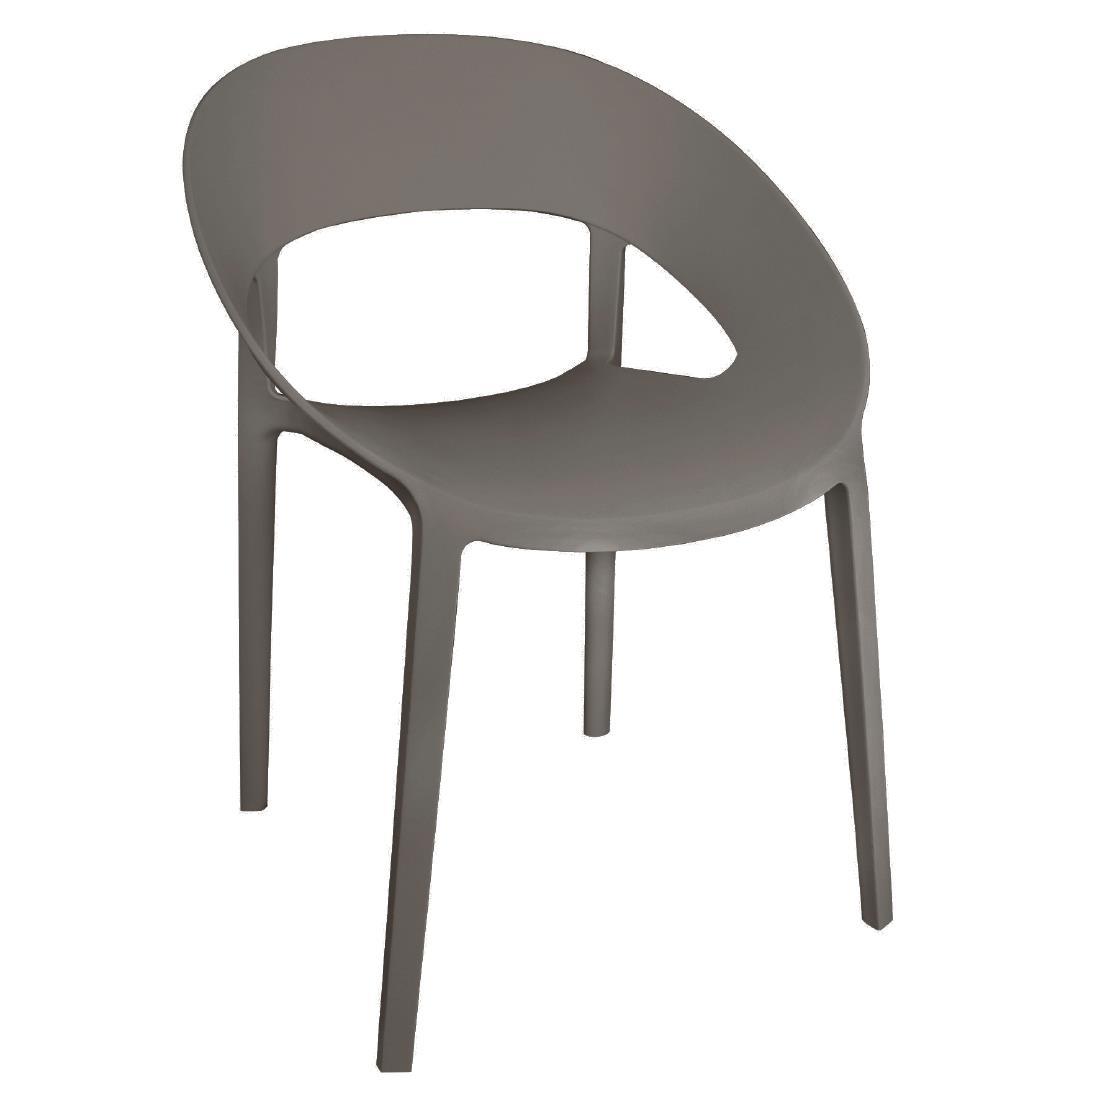 GR339 - Bolero PP Wraparound Chair Coffee (Pack 4) - GR339  - 1